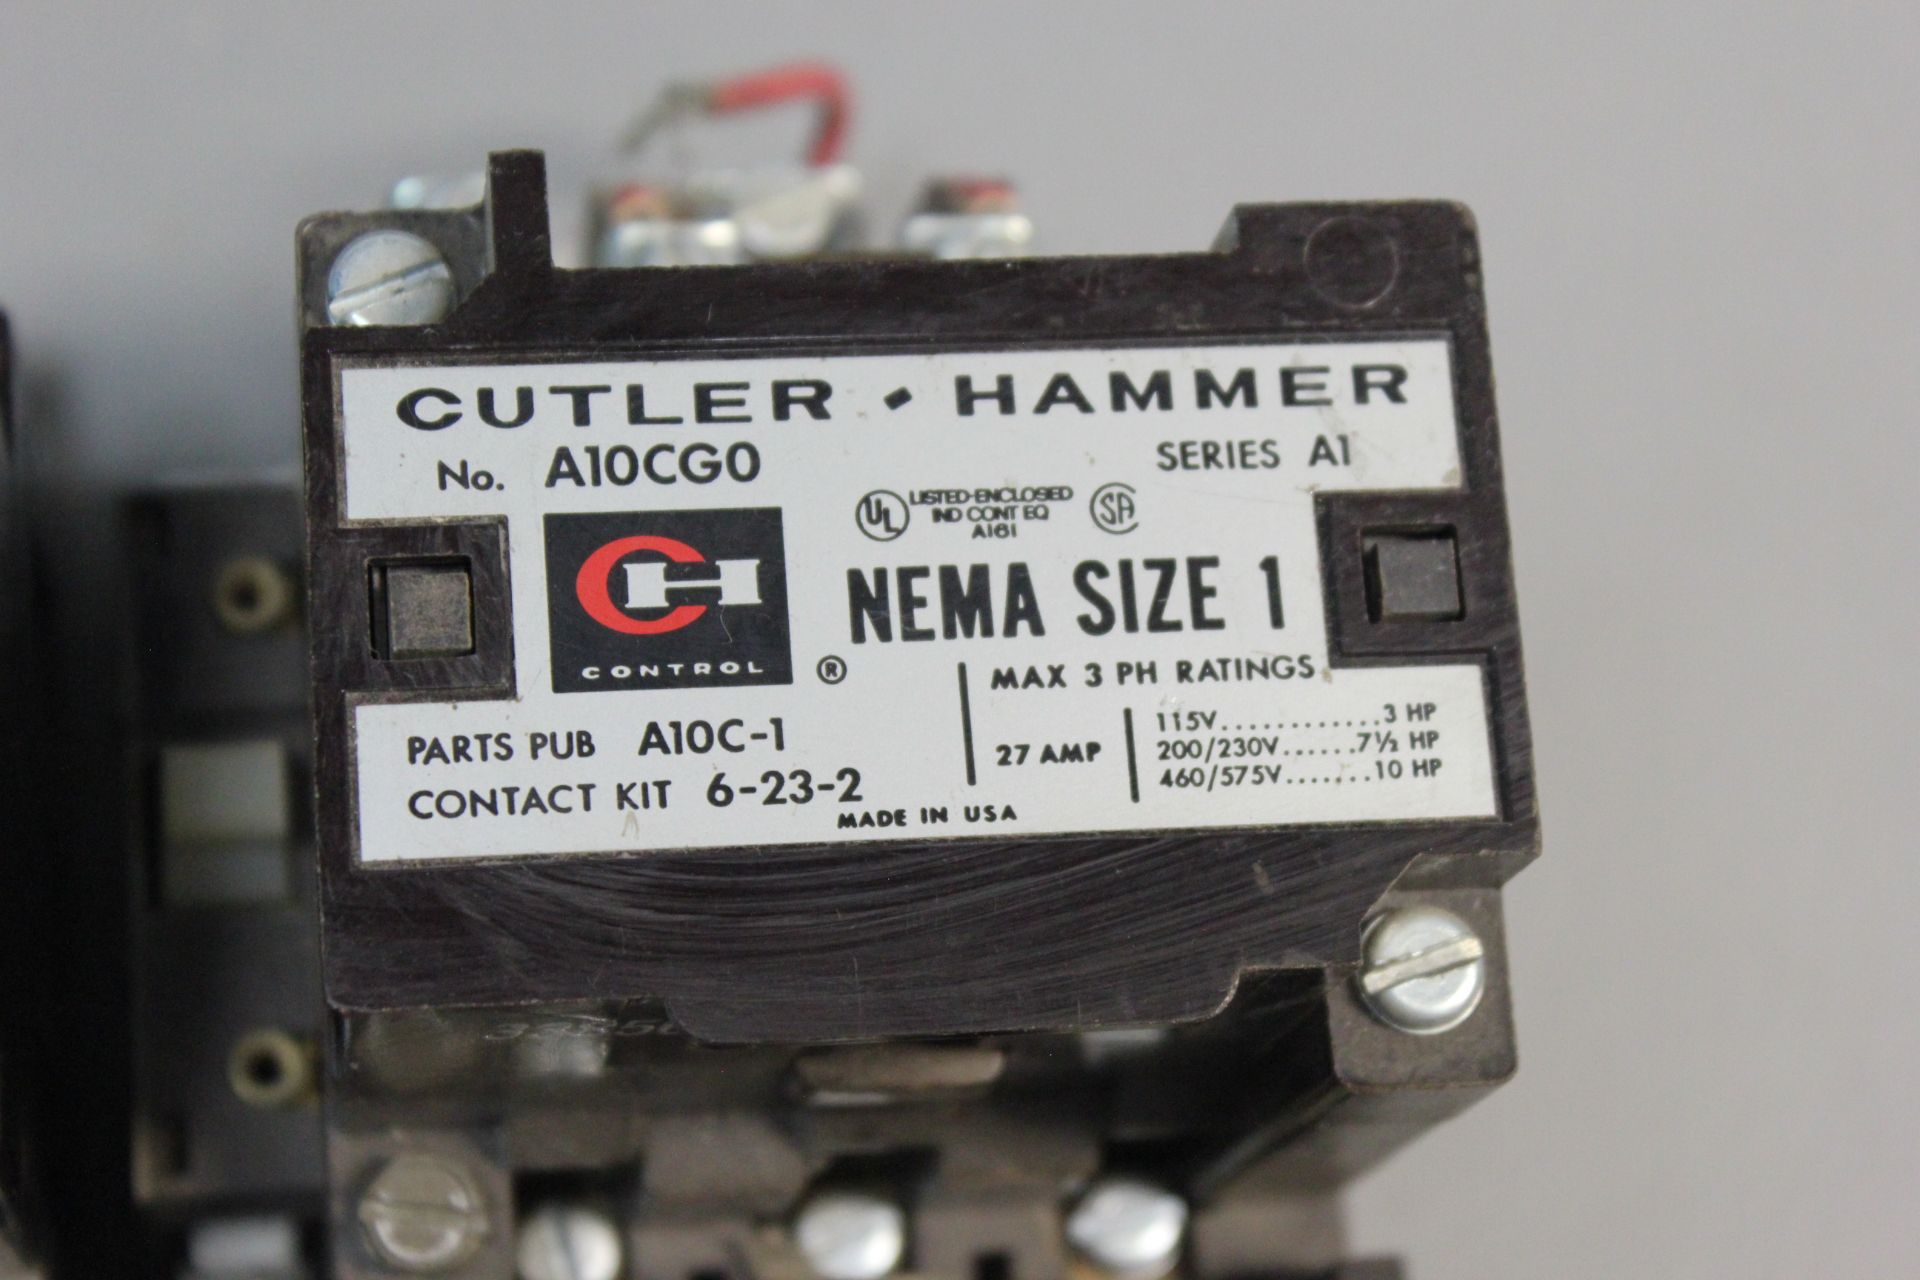 LOT OF 2 CUTLER HAMMER NEMA SIZE 1 MOTOR STARTERS - Image 3 of 4